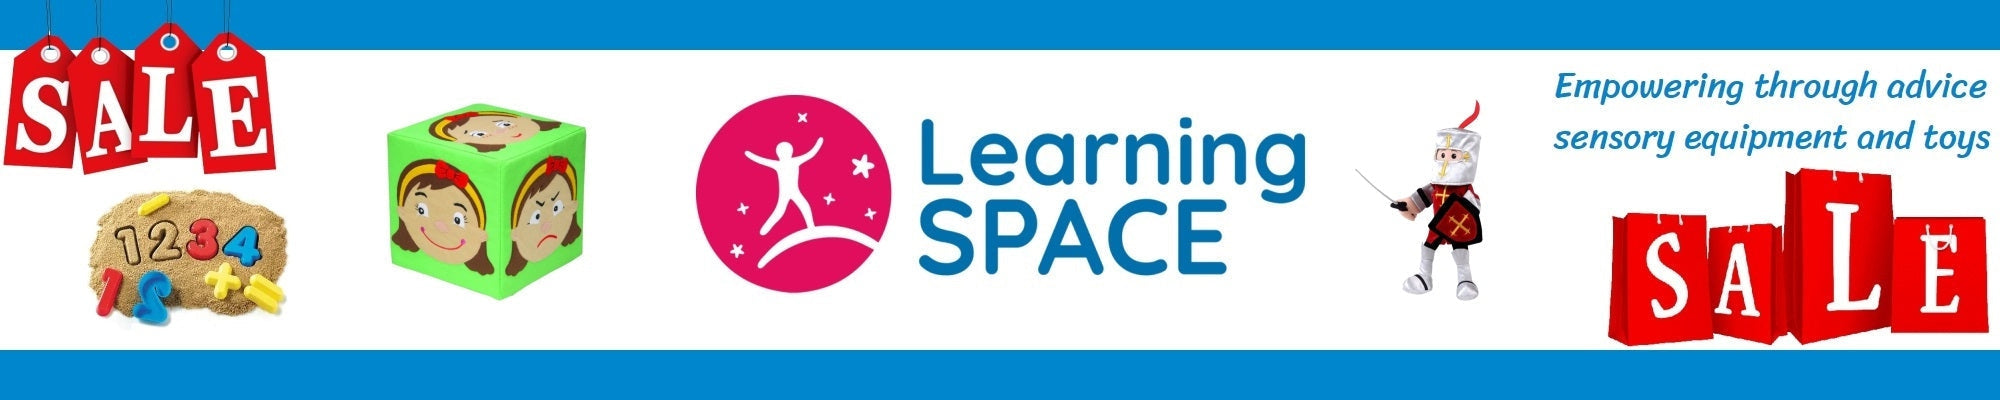 learningspace